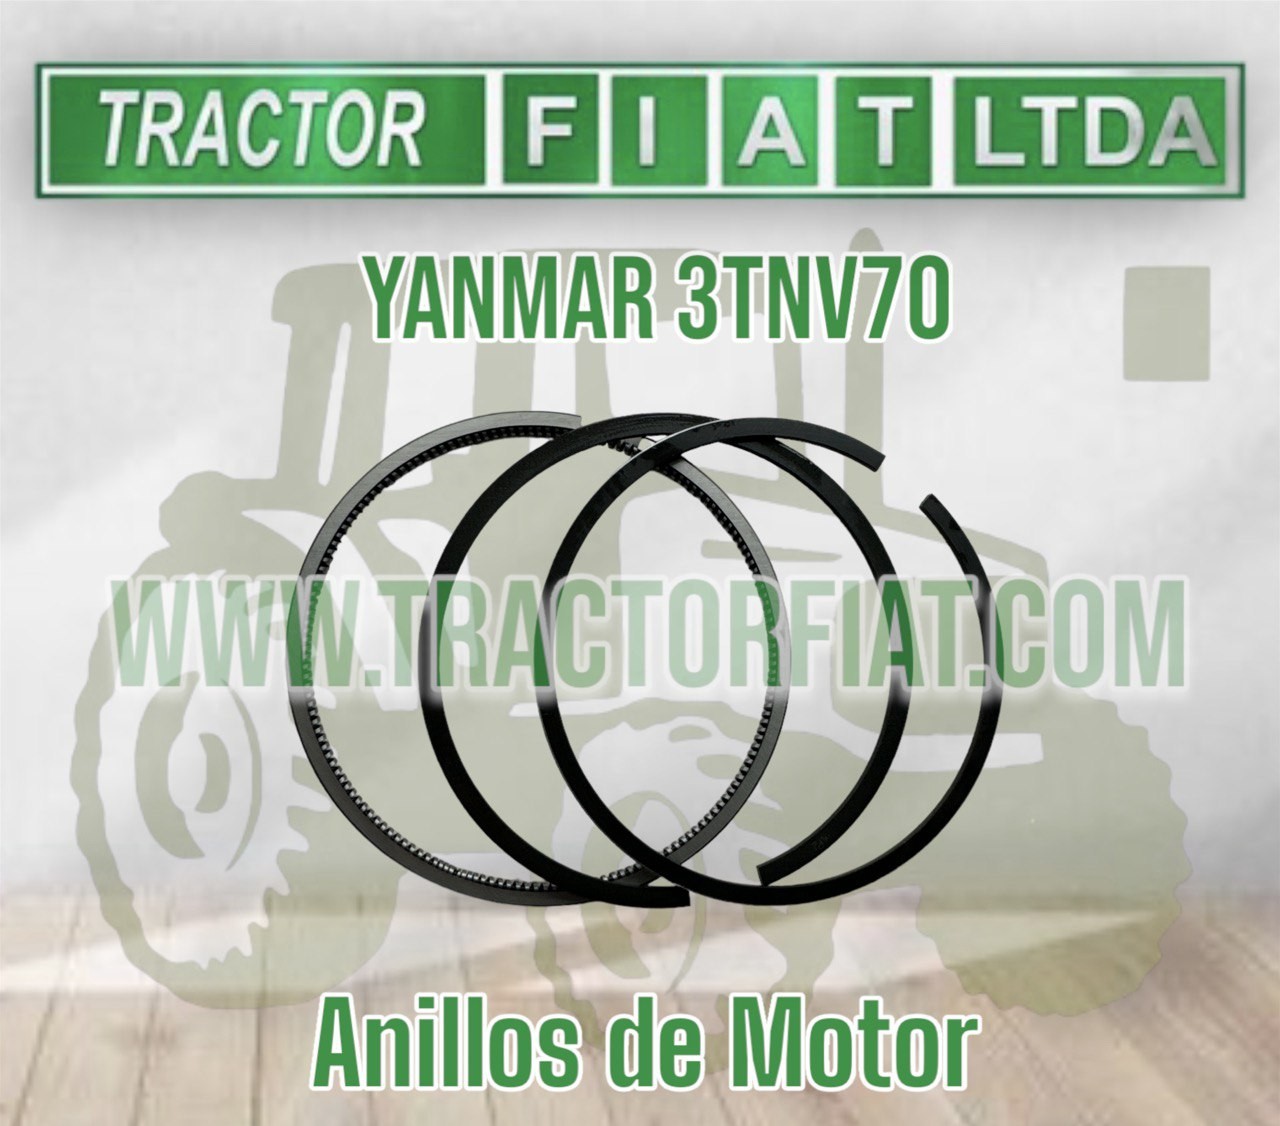 ANILLOS DE MOTOR -  YANMAR 3TNV70